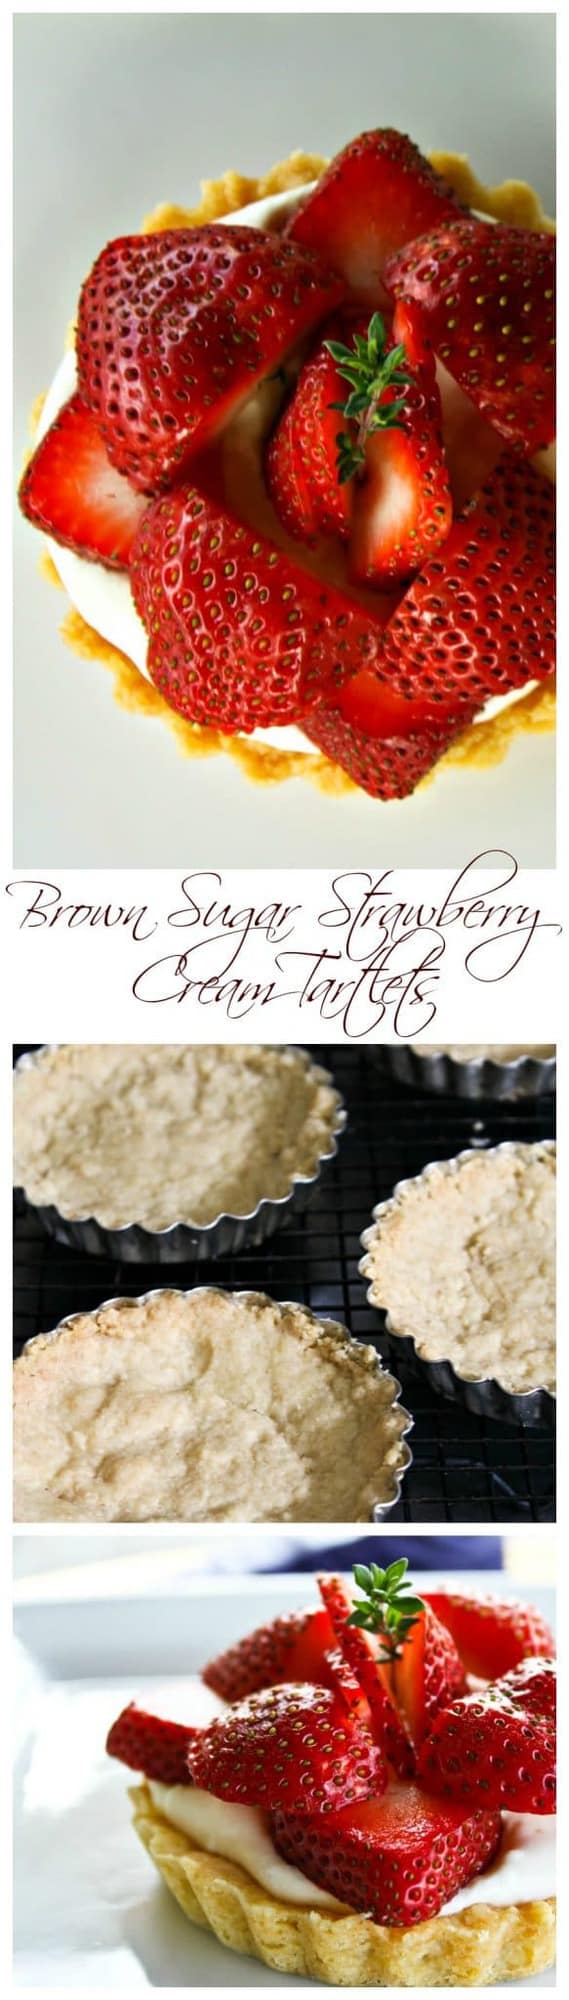 Brown Sugar Strawberries and Cream Tartlets